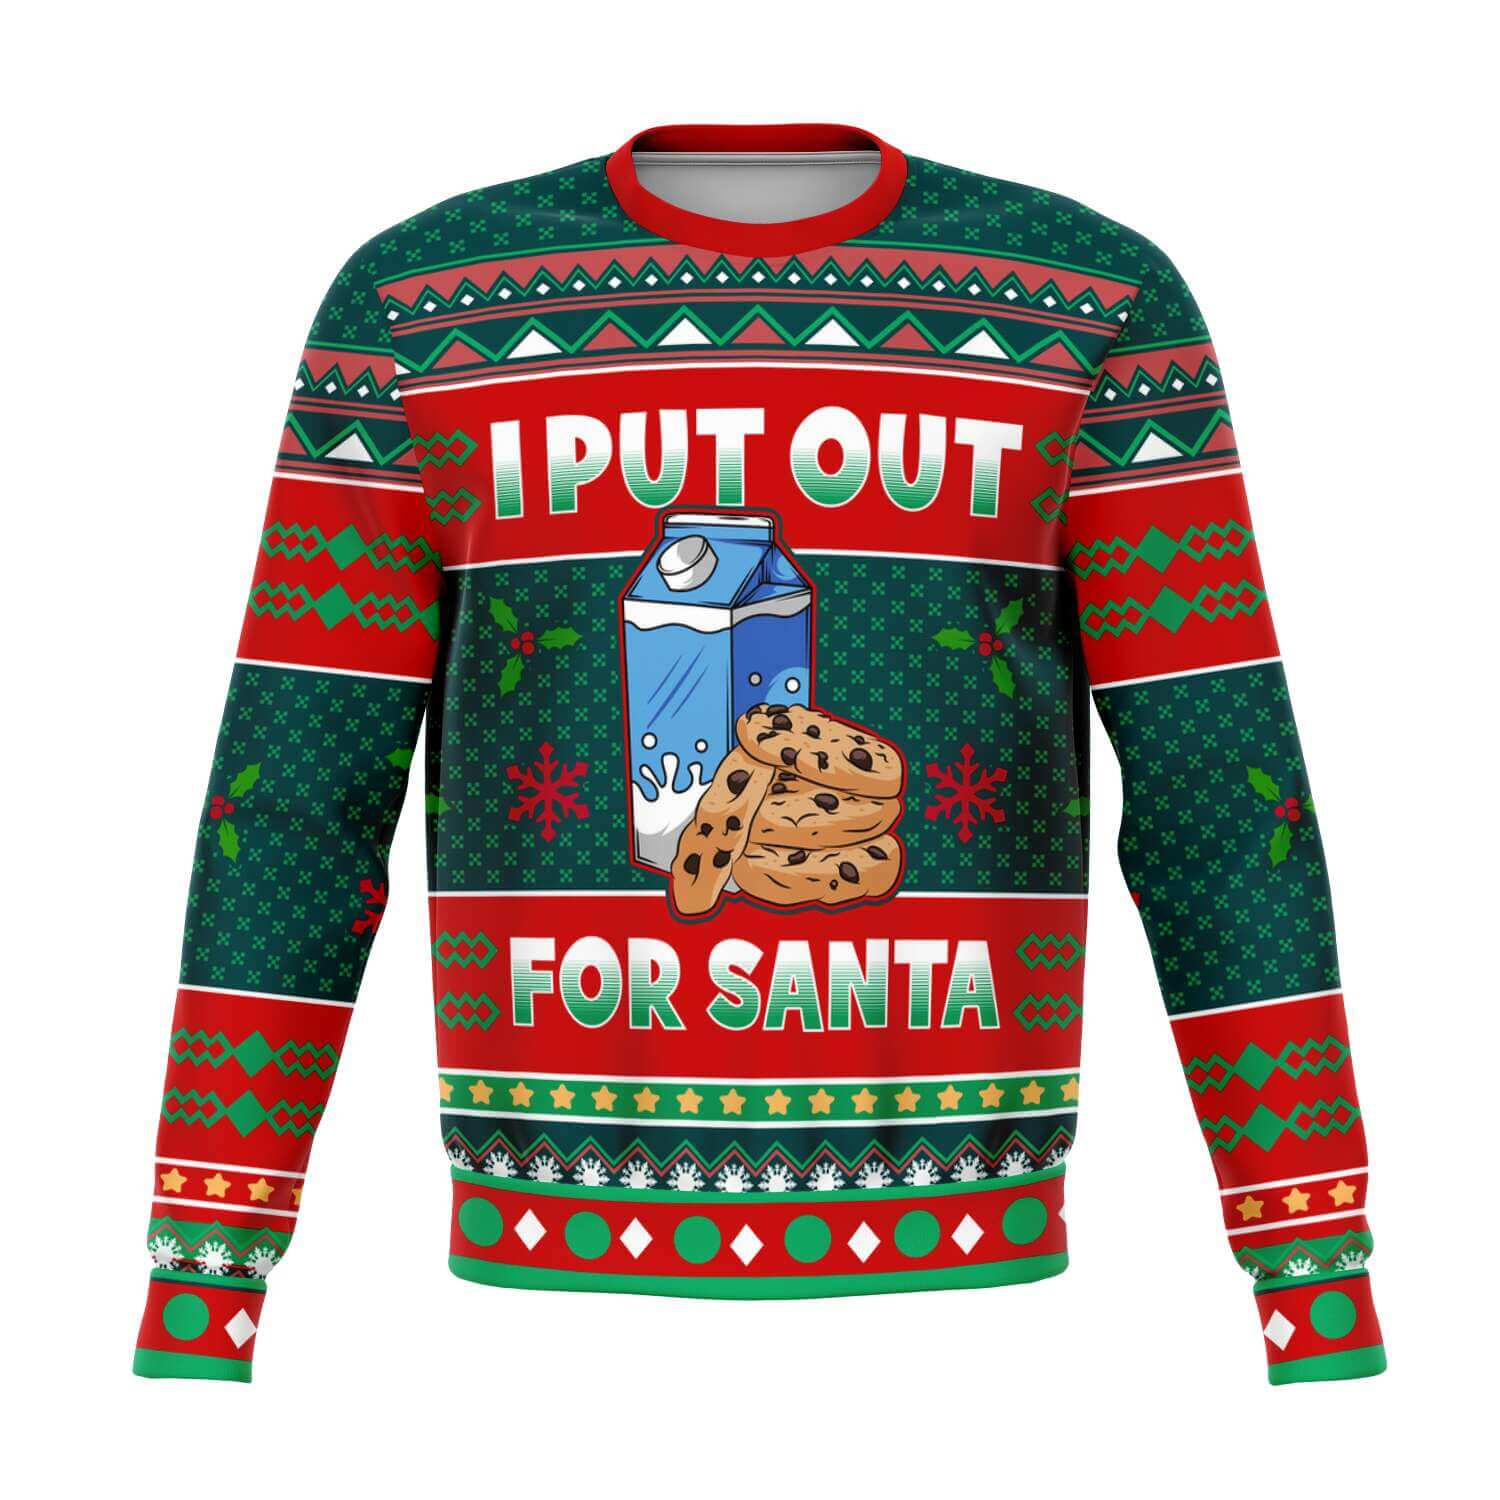 I-put-out-for-Santa-Athletic-Fashion-sweatshirt